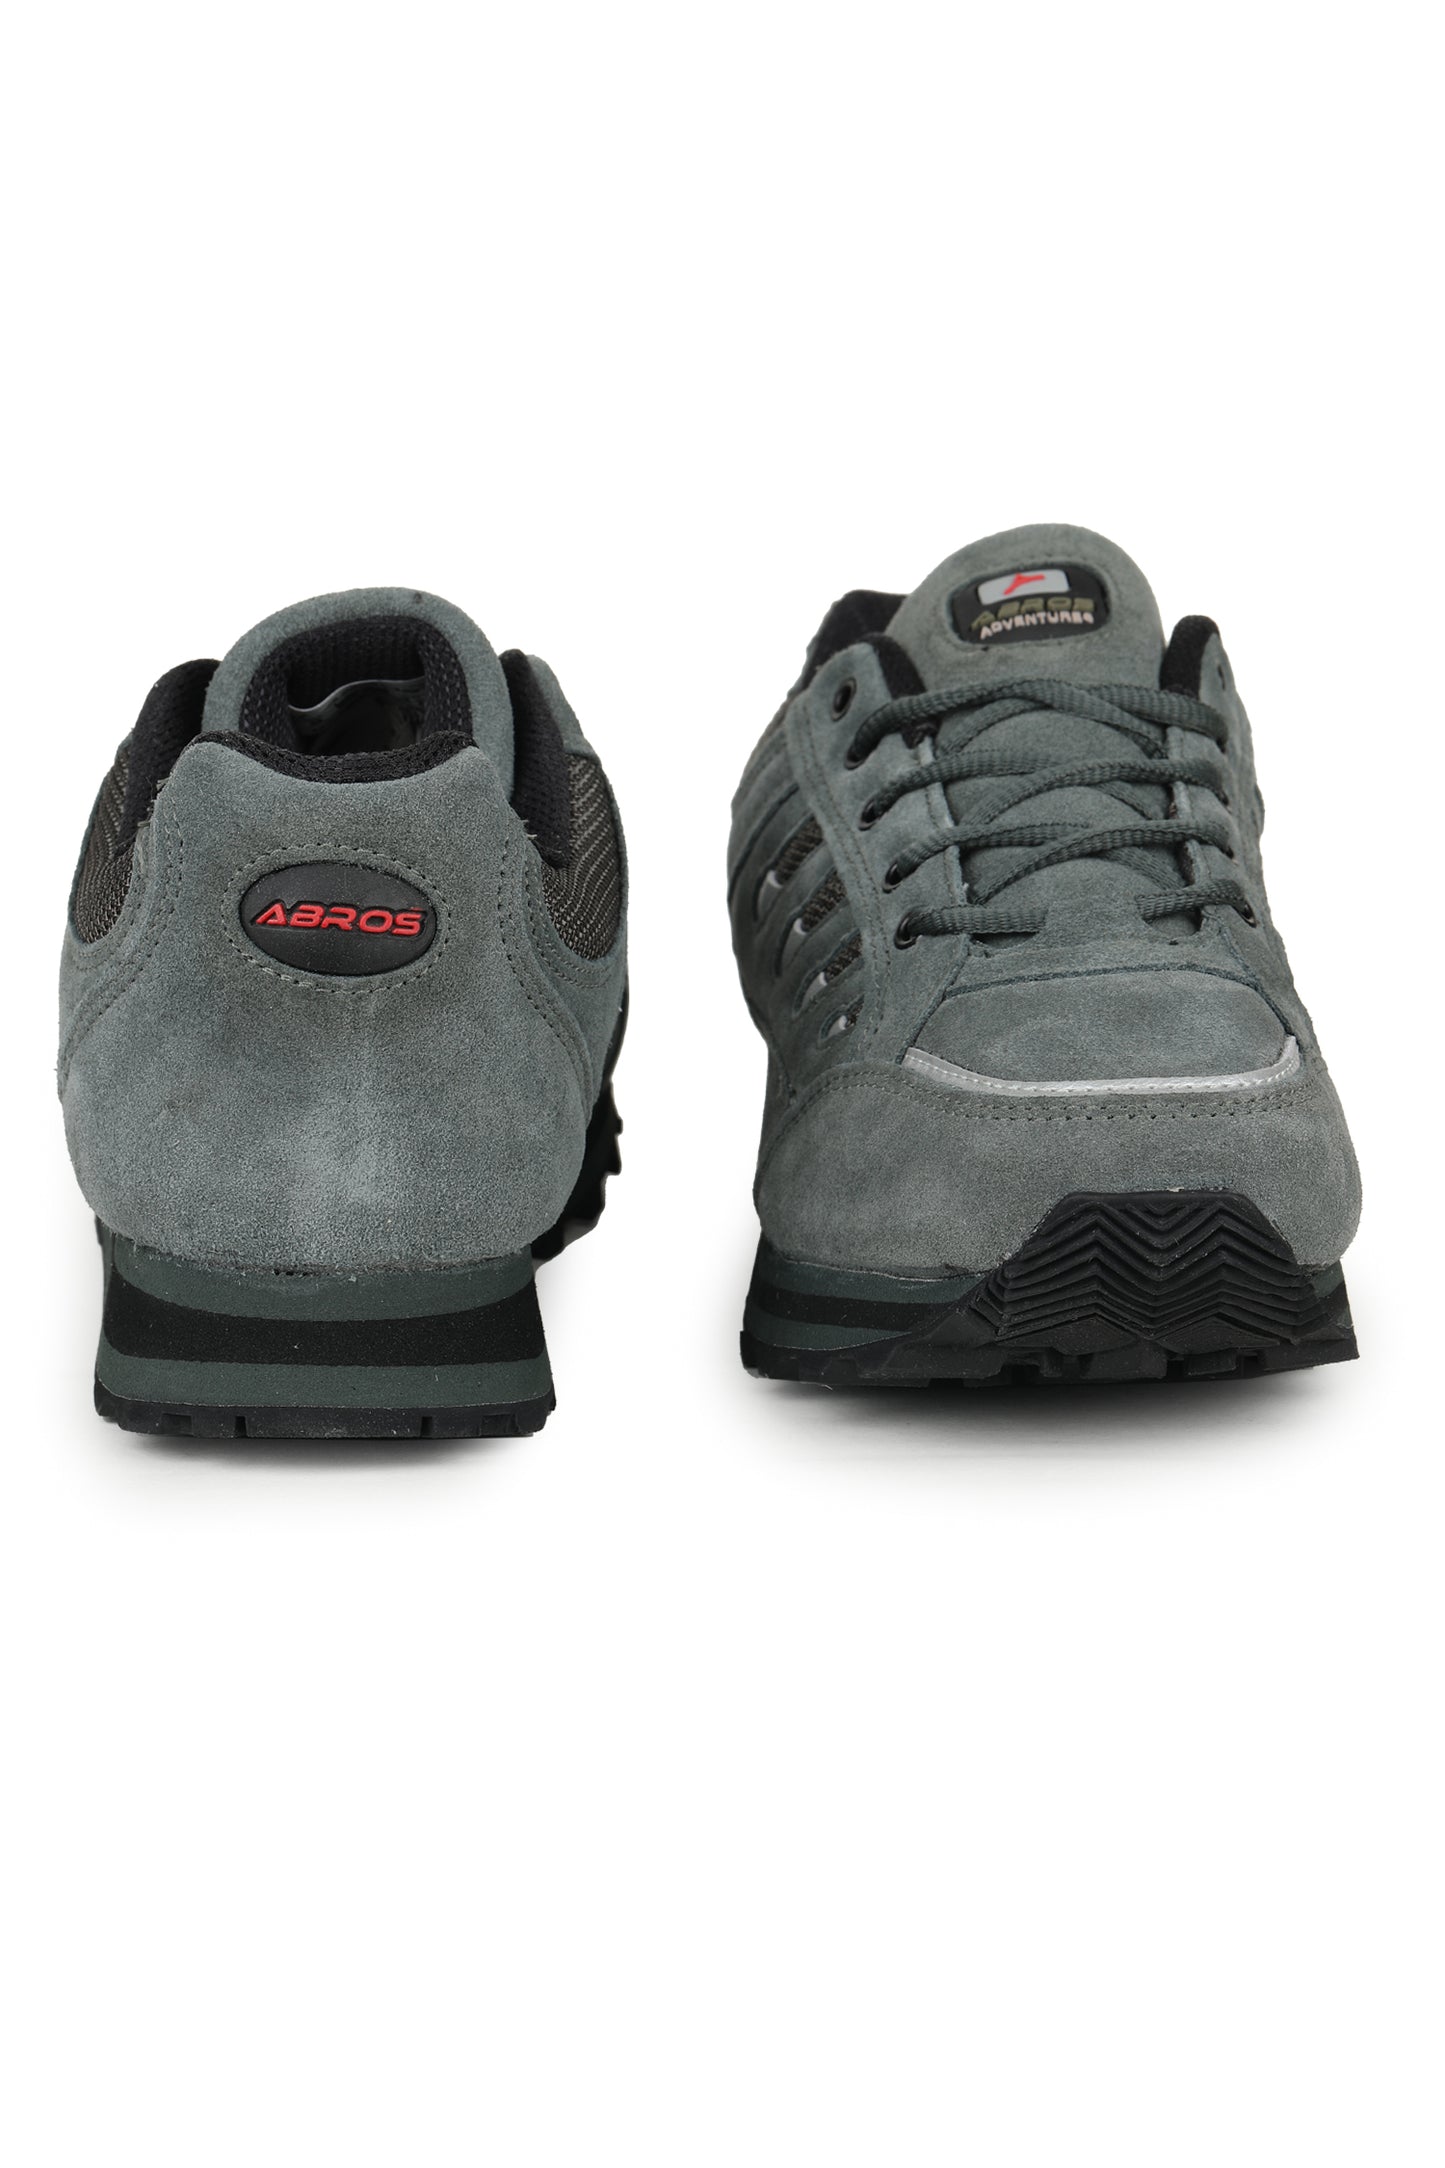 Jogger-3O Outdoor-Shoes For Men's